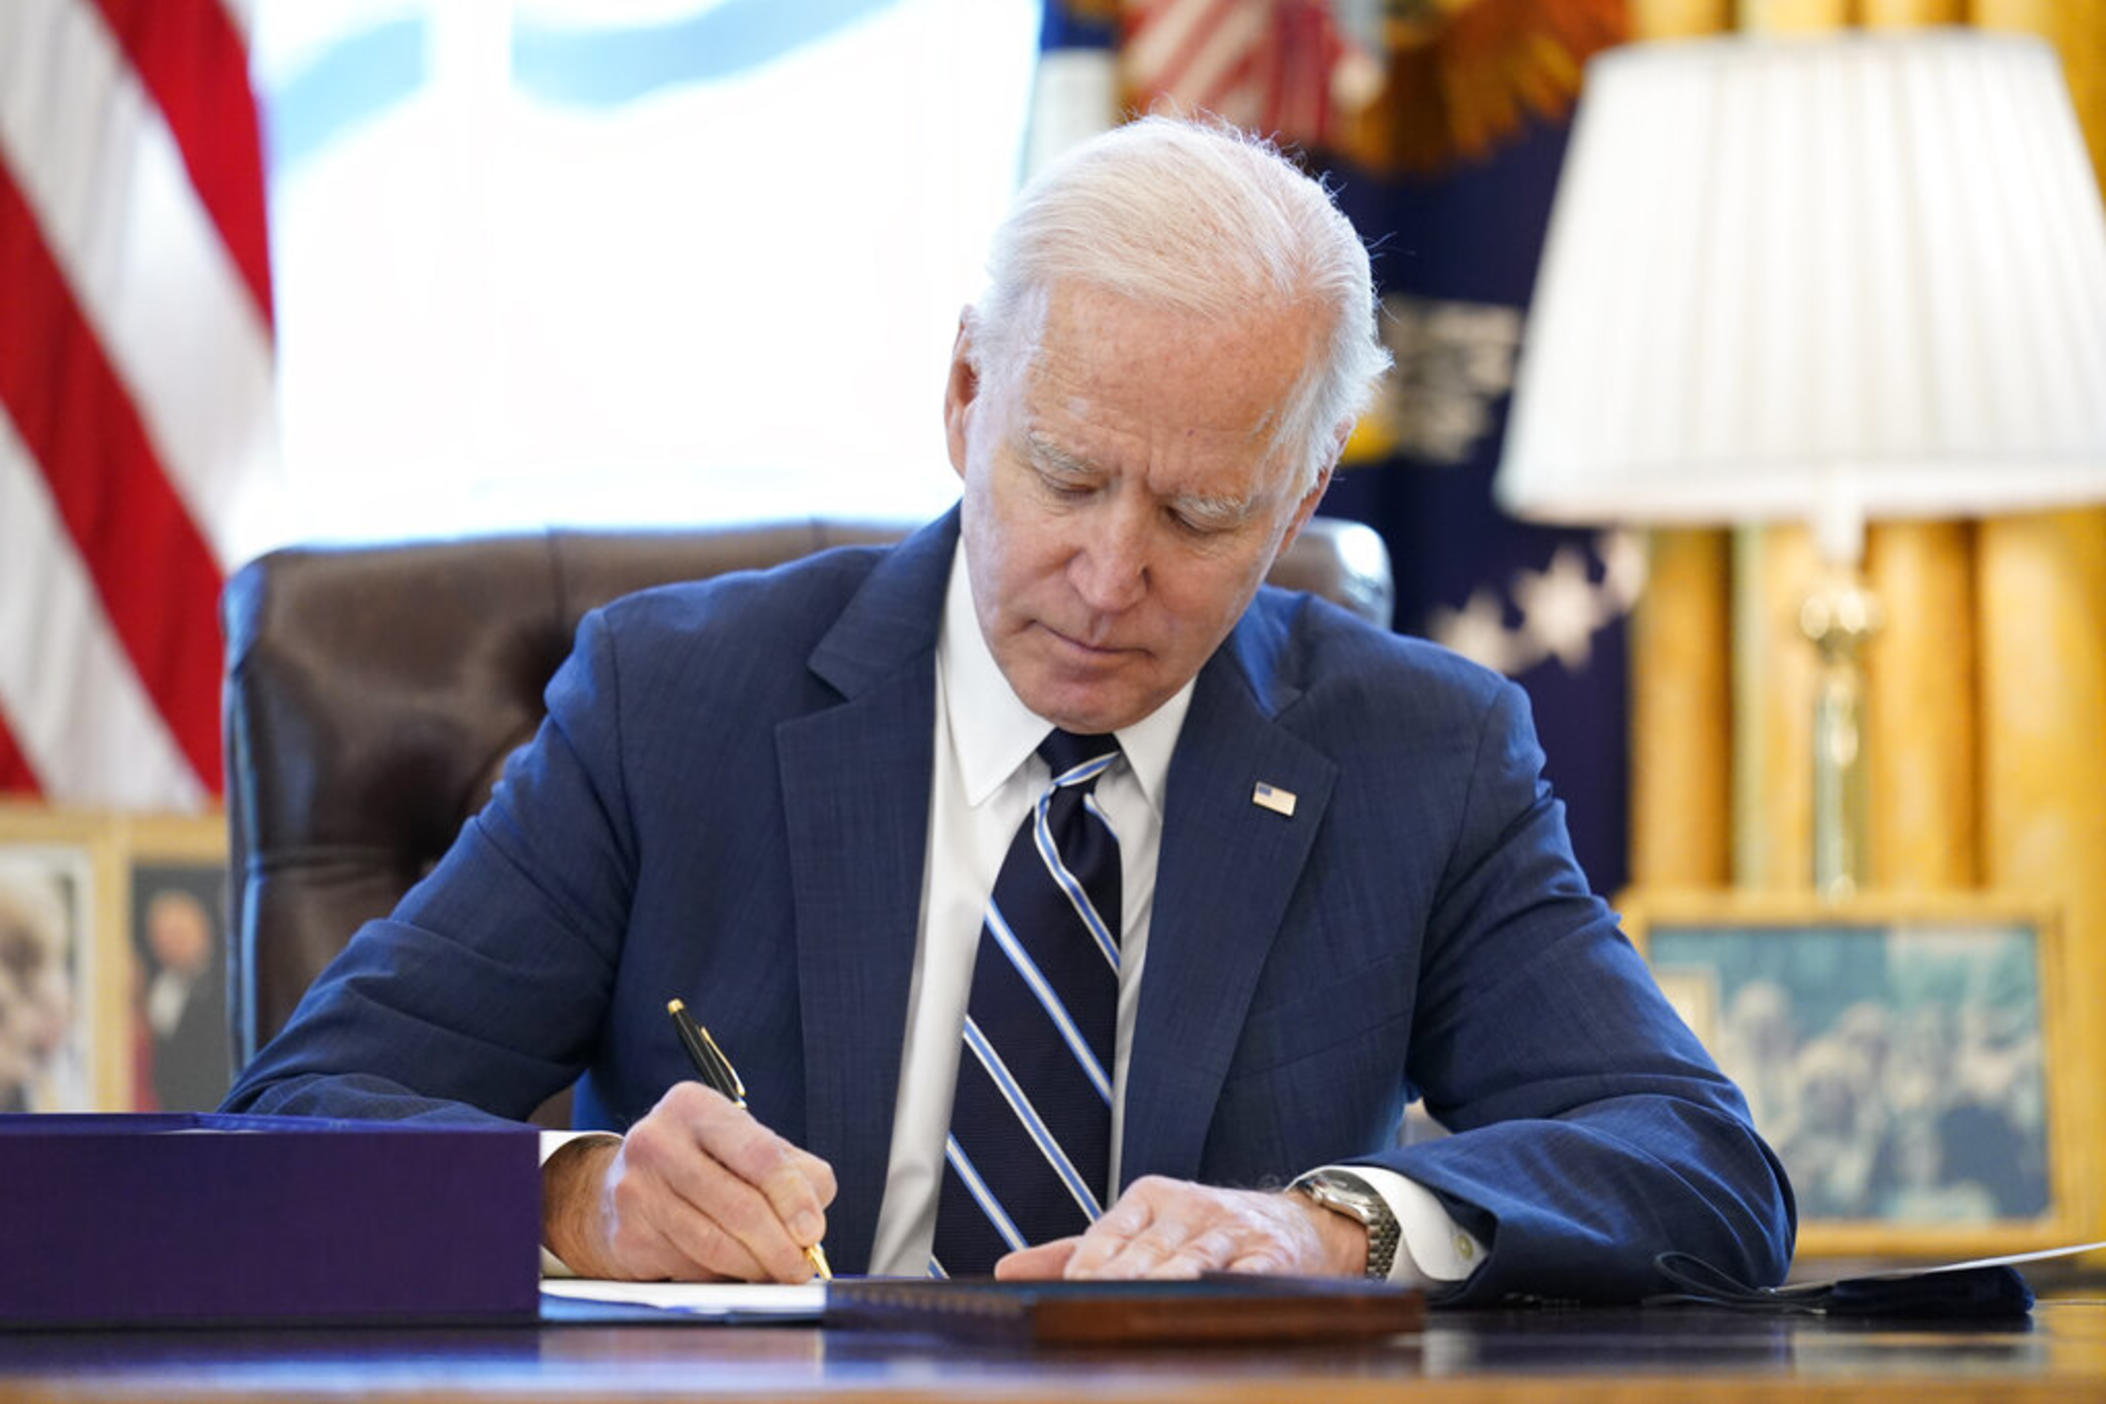 Joe Biden signing